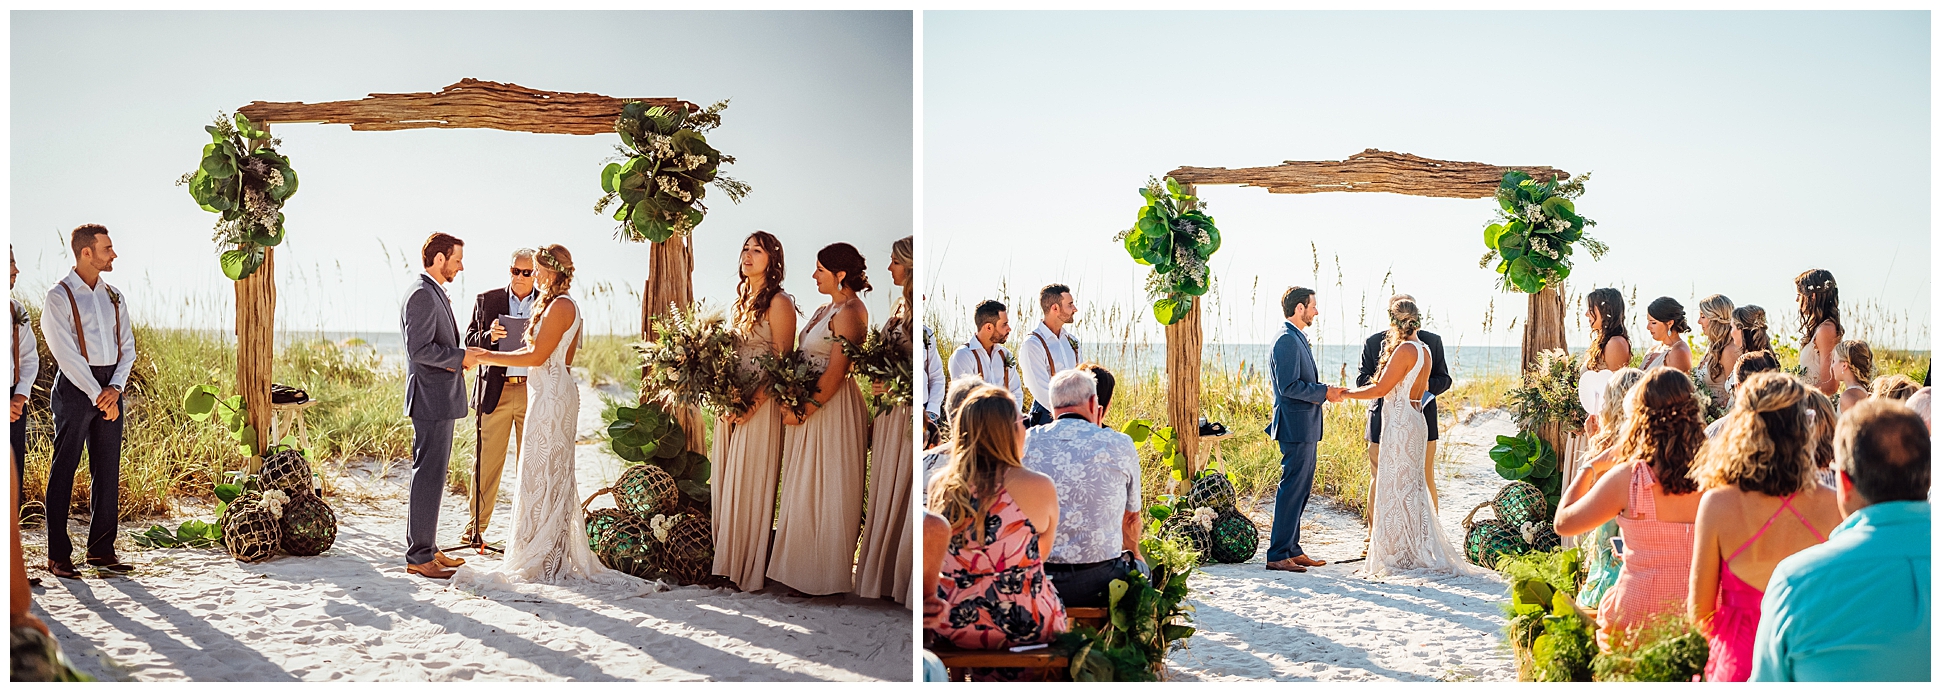 medium-format-film-vs-digital-wedding-photography-florida-beach_0012.jpg